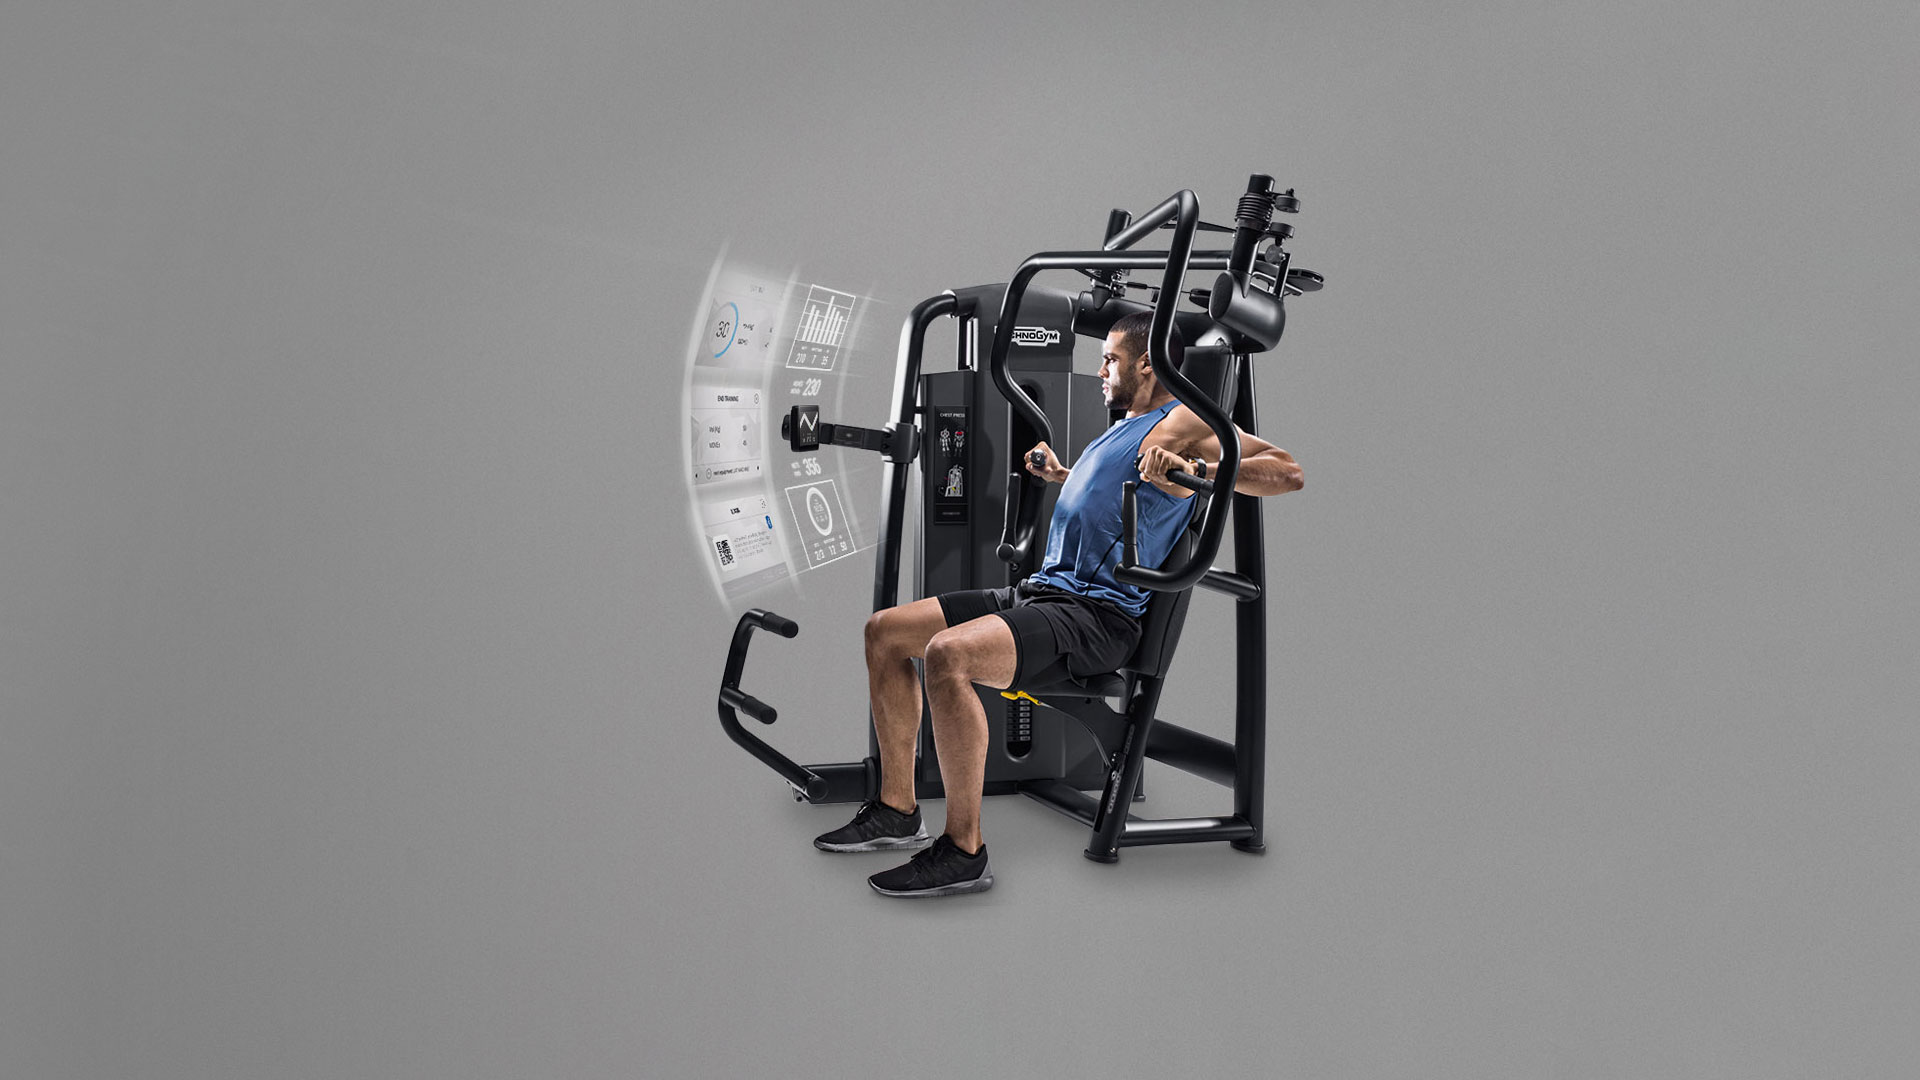 Gym machine for hamstrings & quadriceps: Technogym Dual Leg Curl